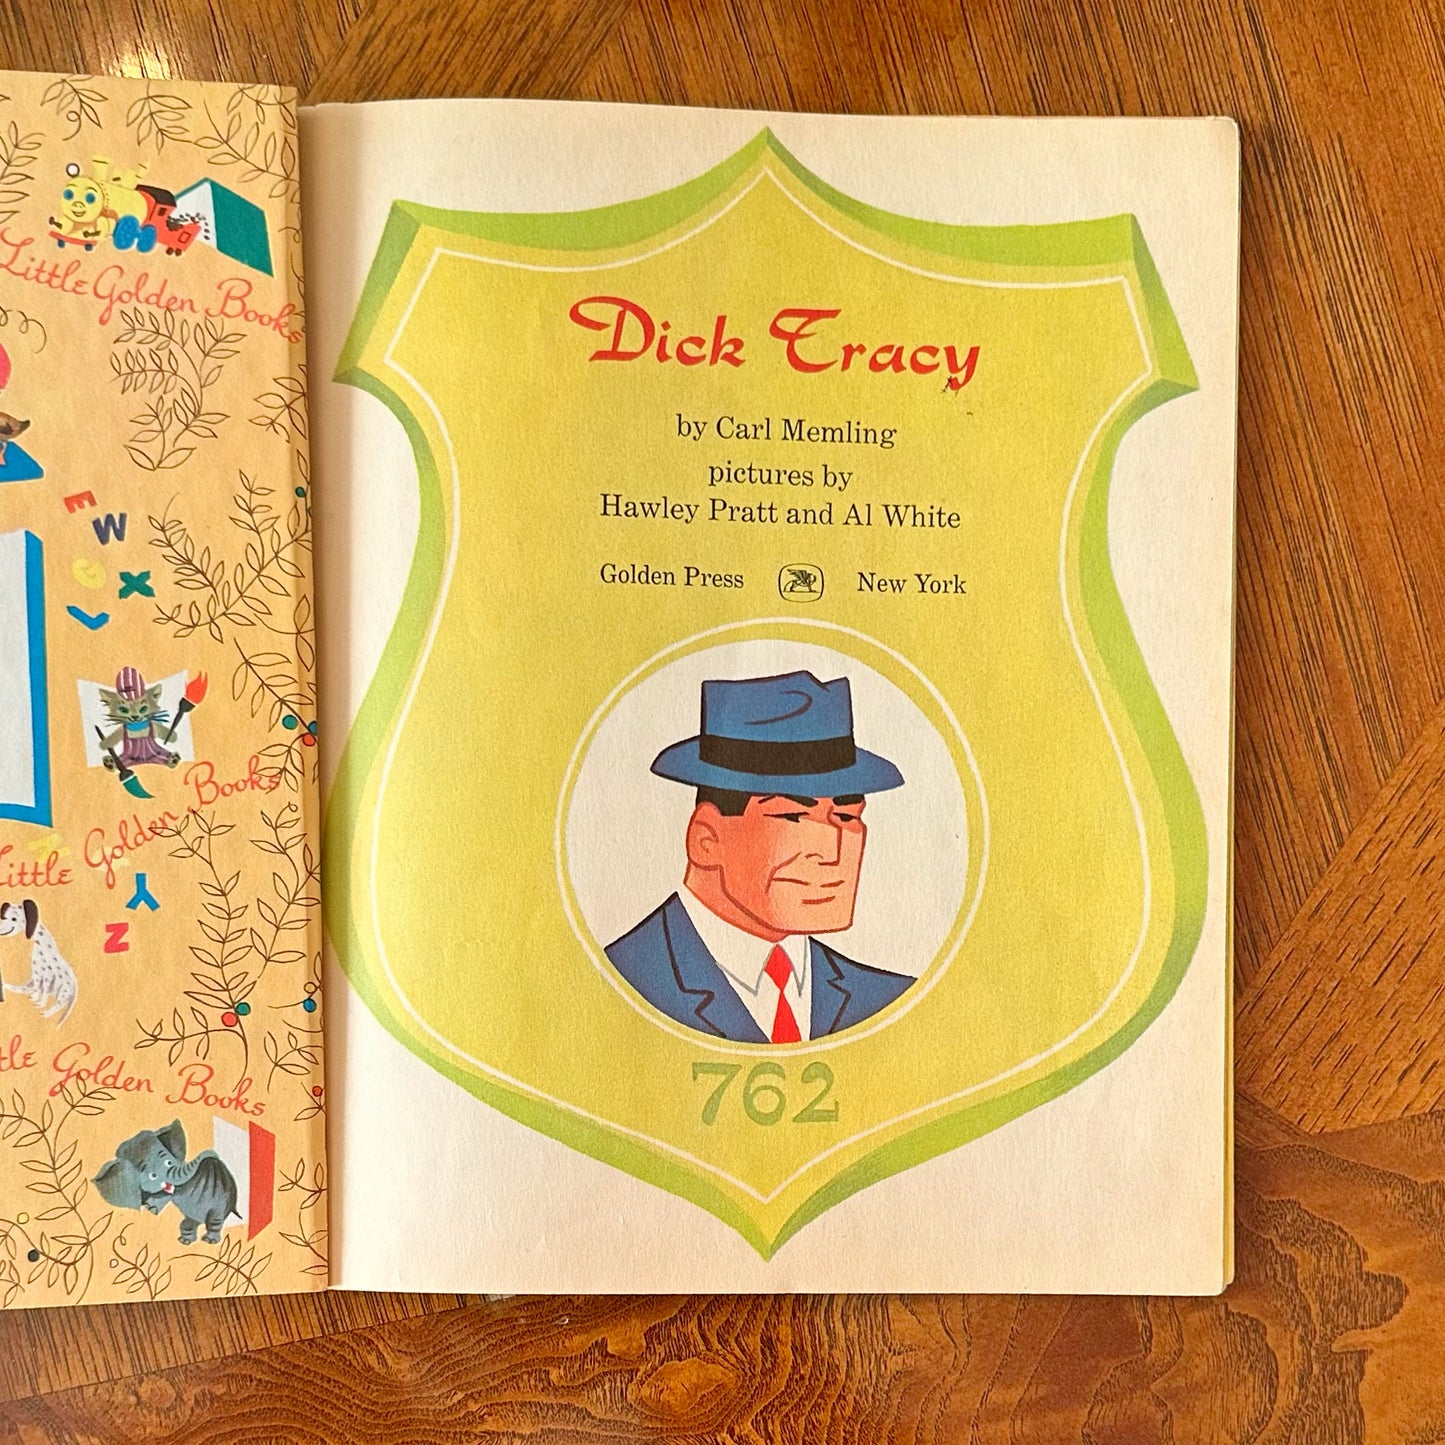 DICK TRACY (1962) - A Little Golden Book